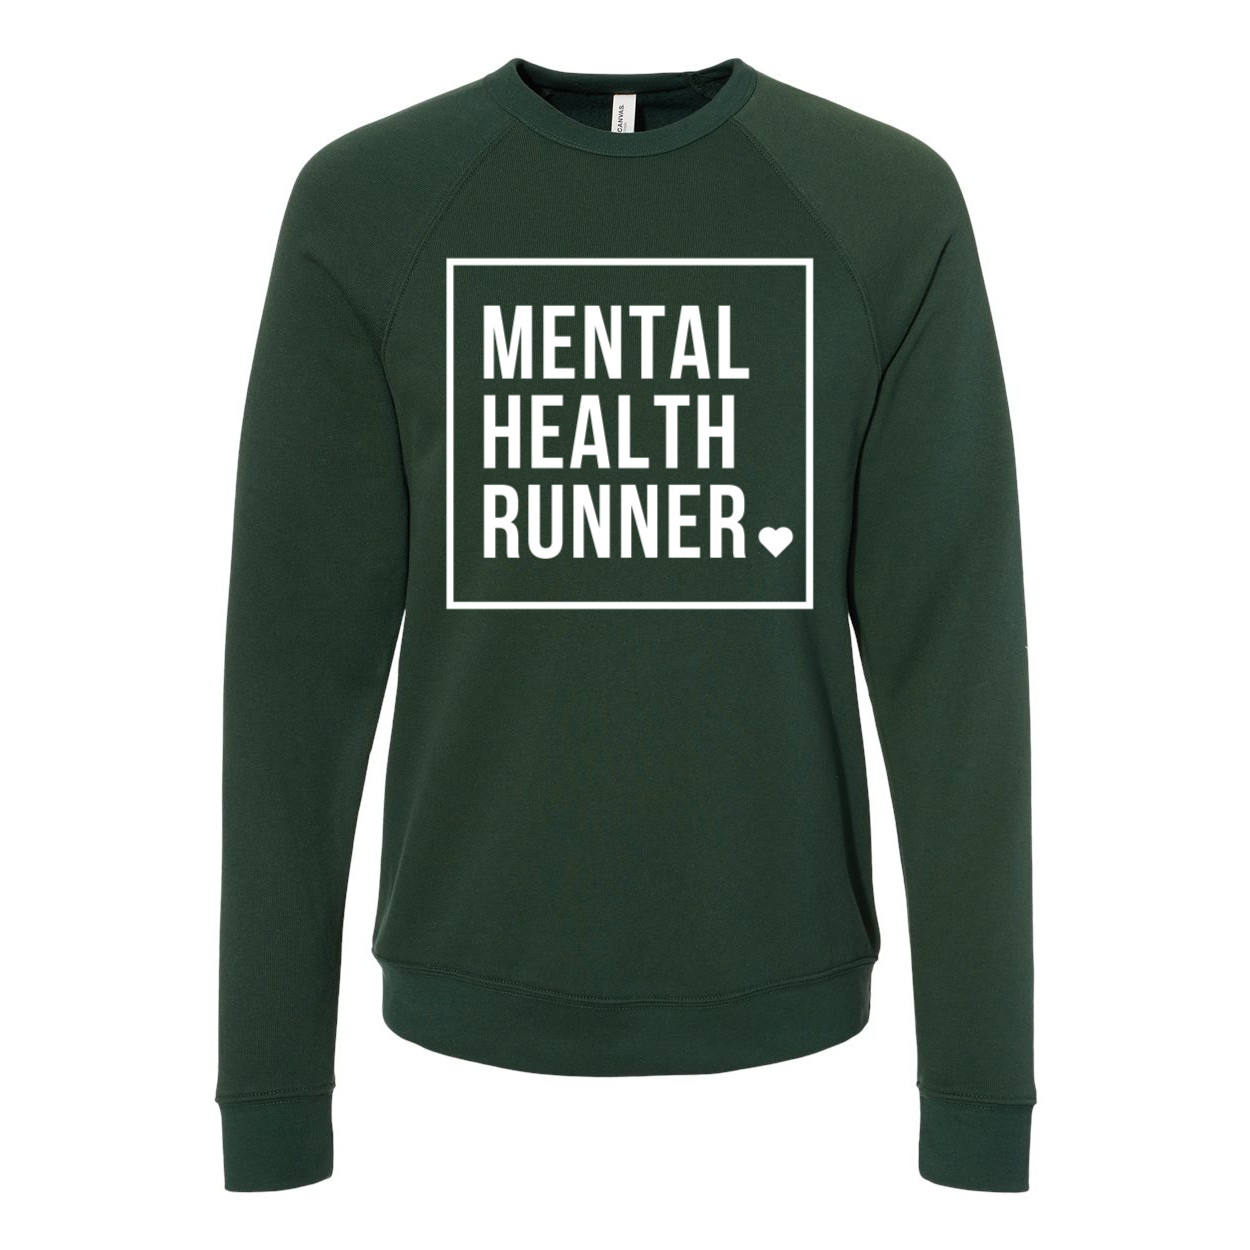 Mental Health Runner Crewneck Sweatshirt